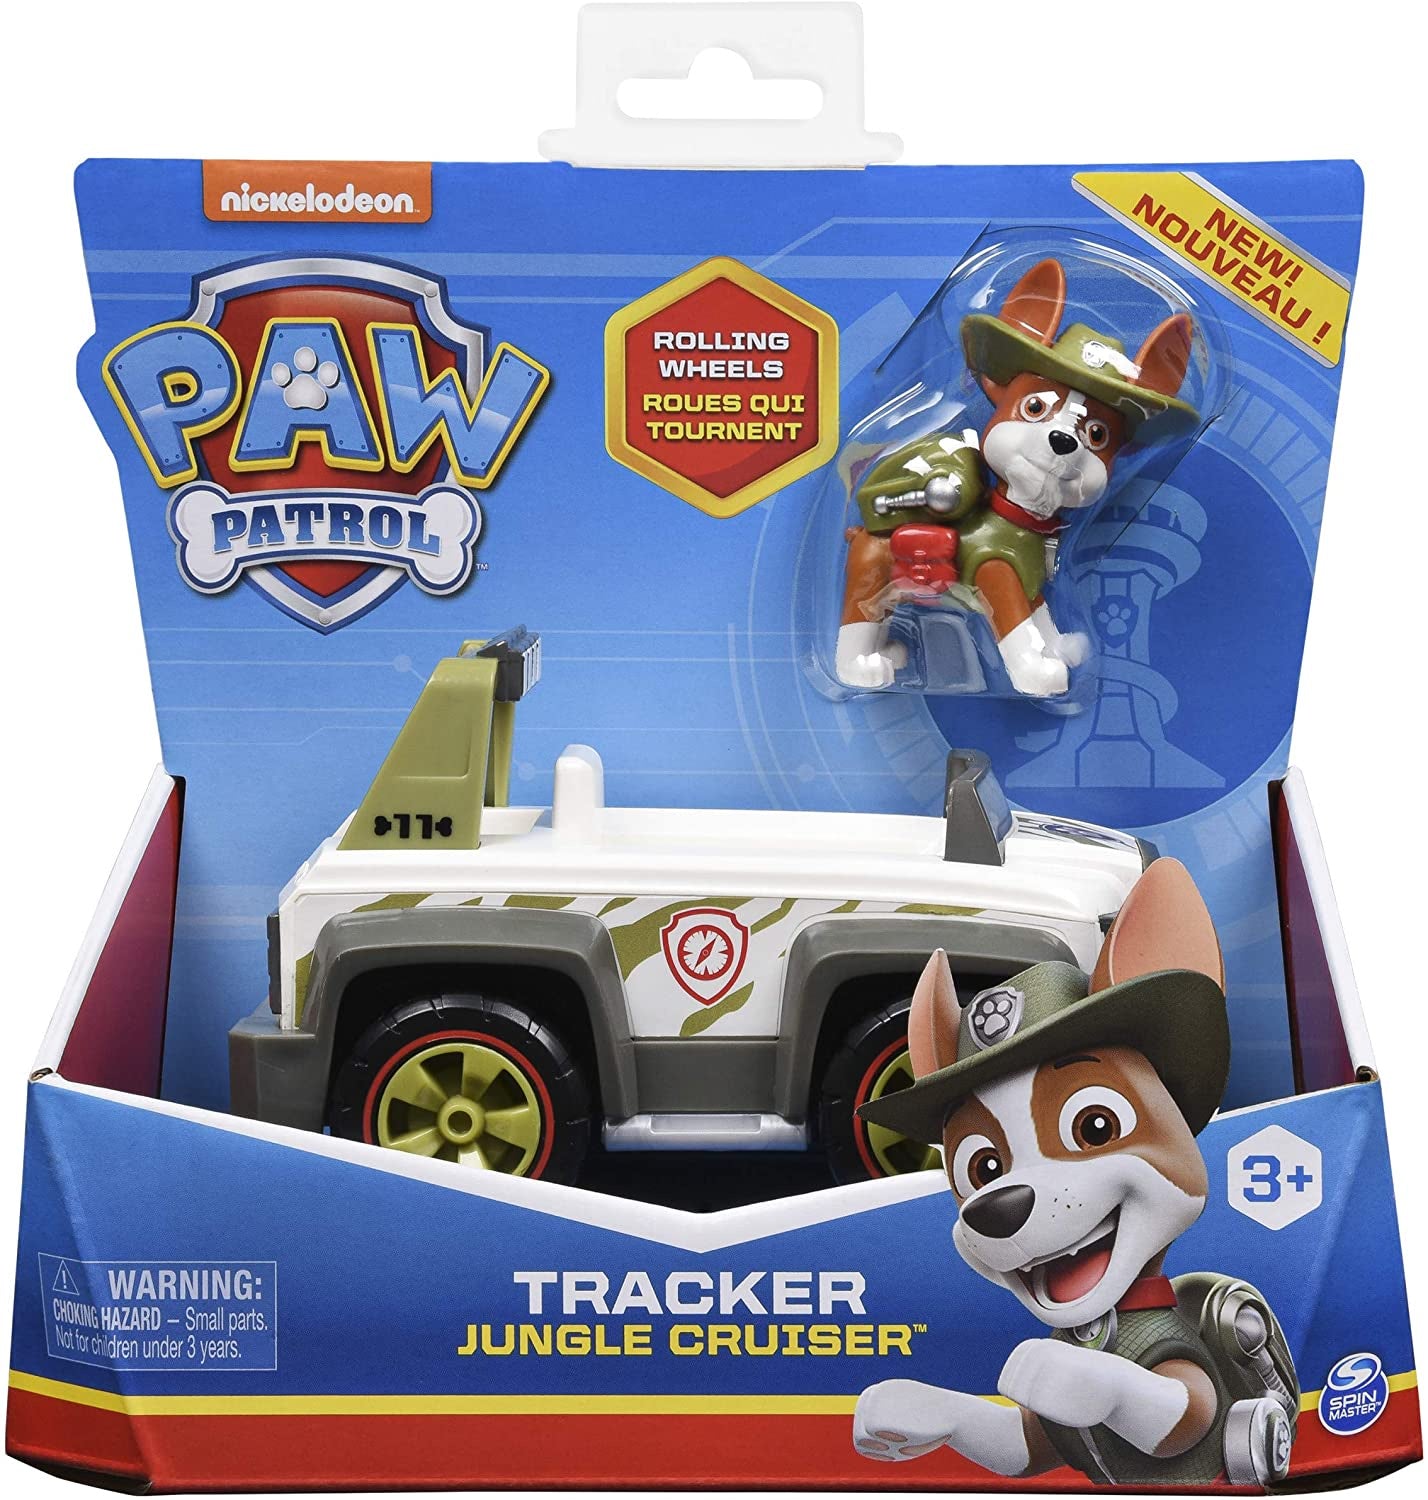 Paw Patrol Tracker Jungle Cruiser